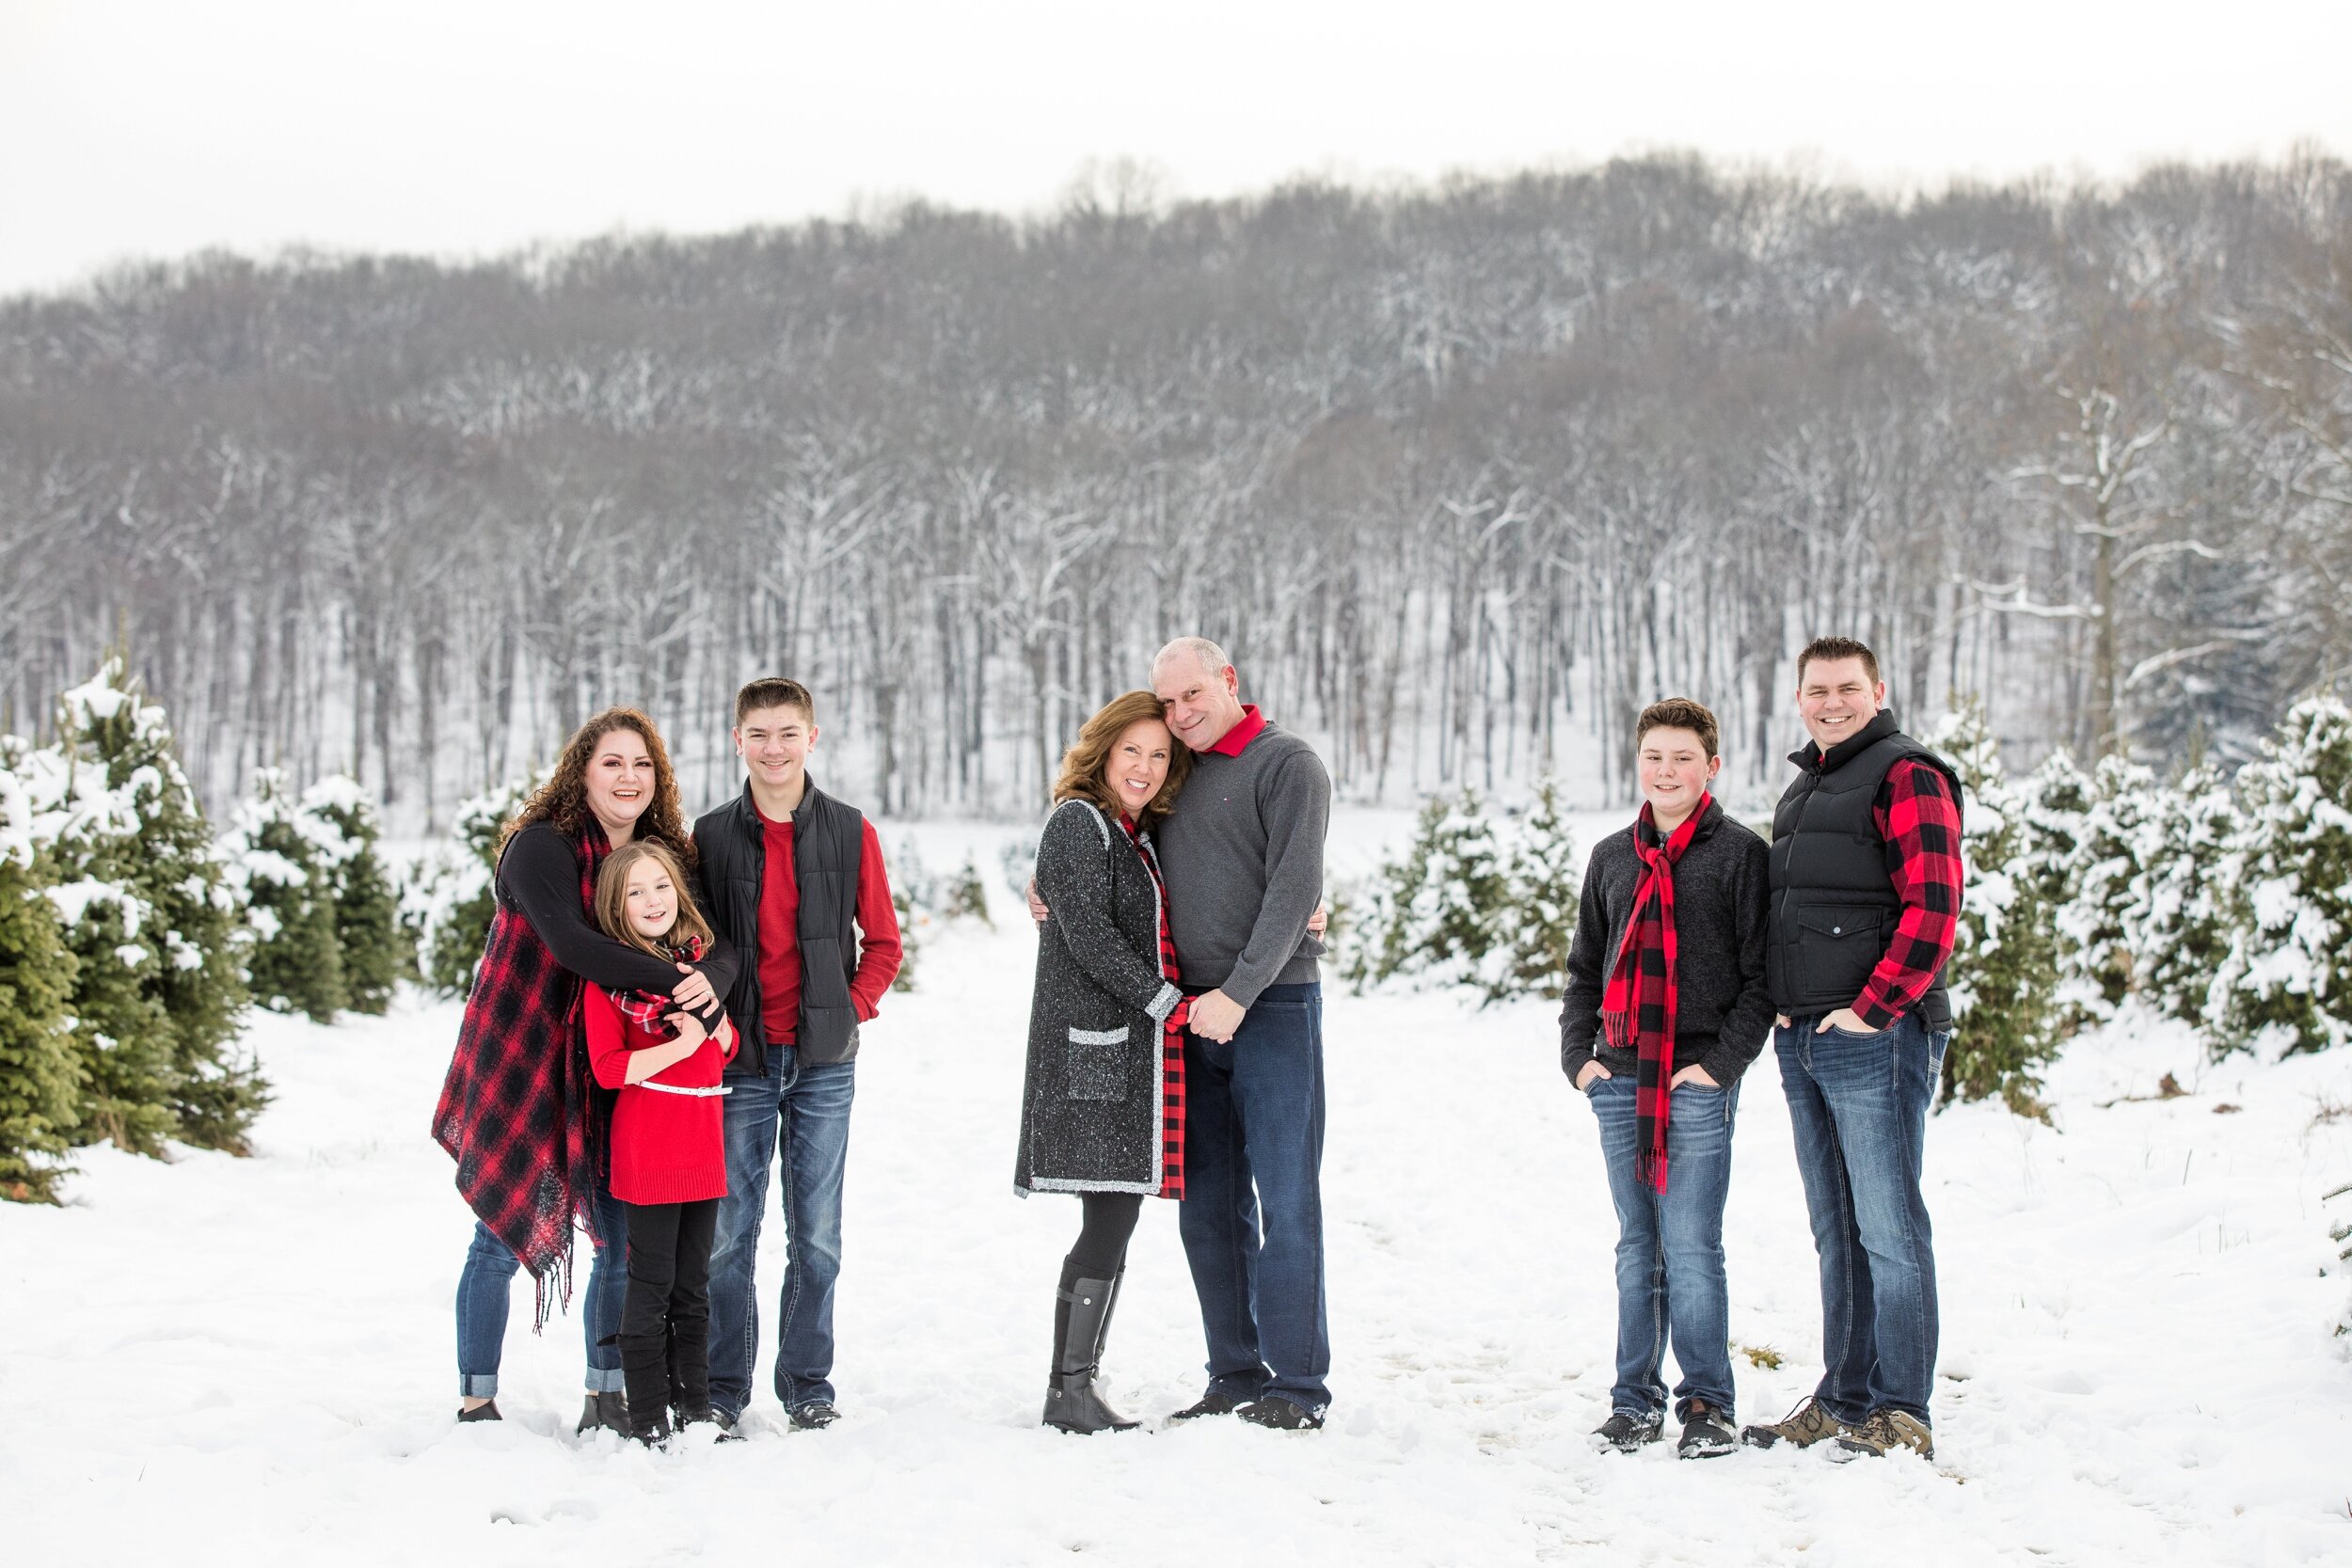 Extended Family Christmas Tree Farm Photos, extended family photo posing, extended family photo outfits, pittsburgh family photographer, zelienople family photographer